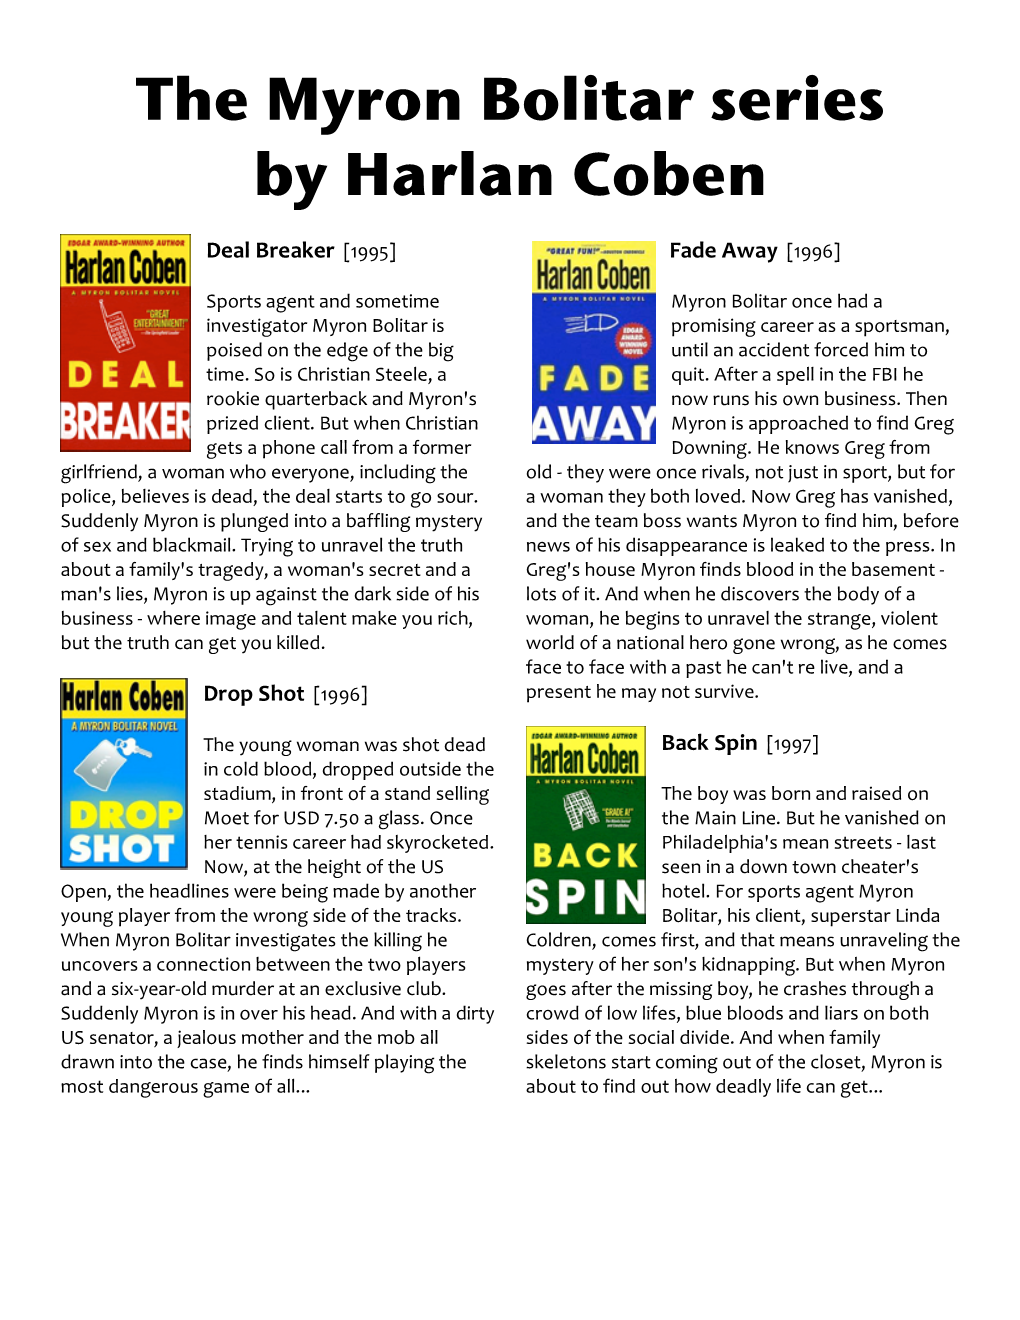 The Myron Bolitar Series by Harlan Coben